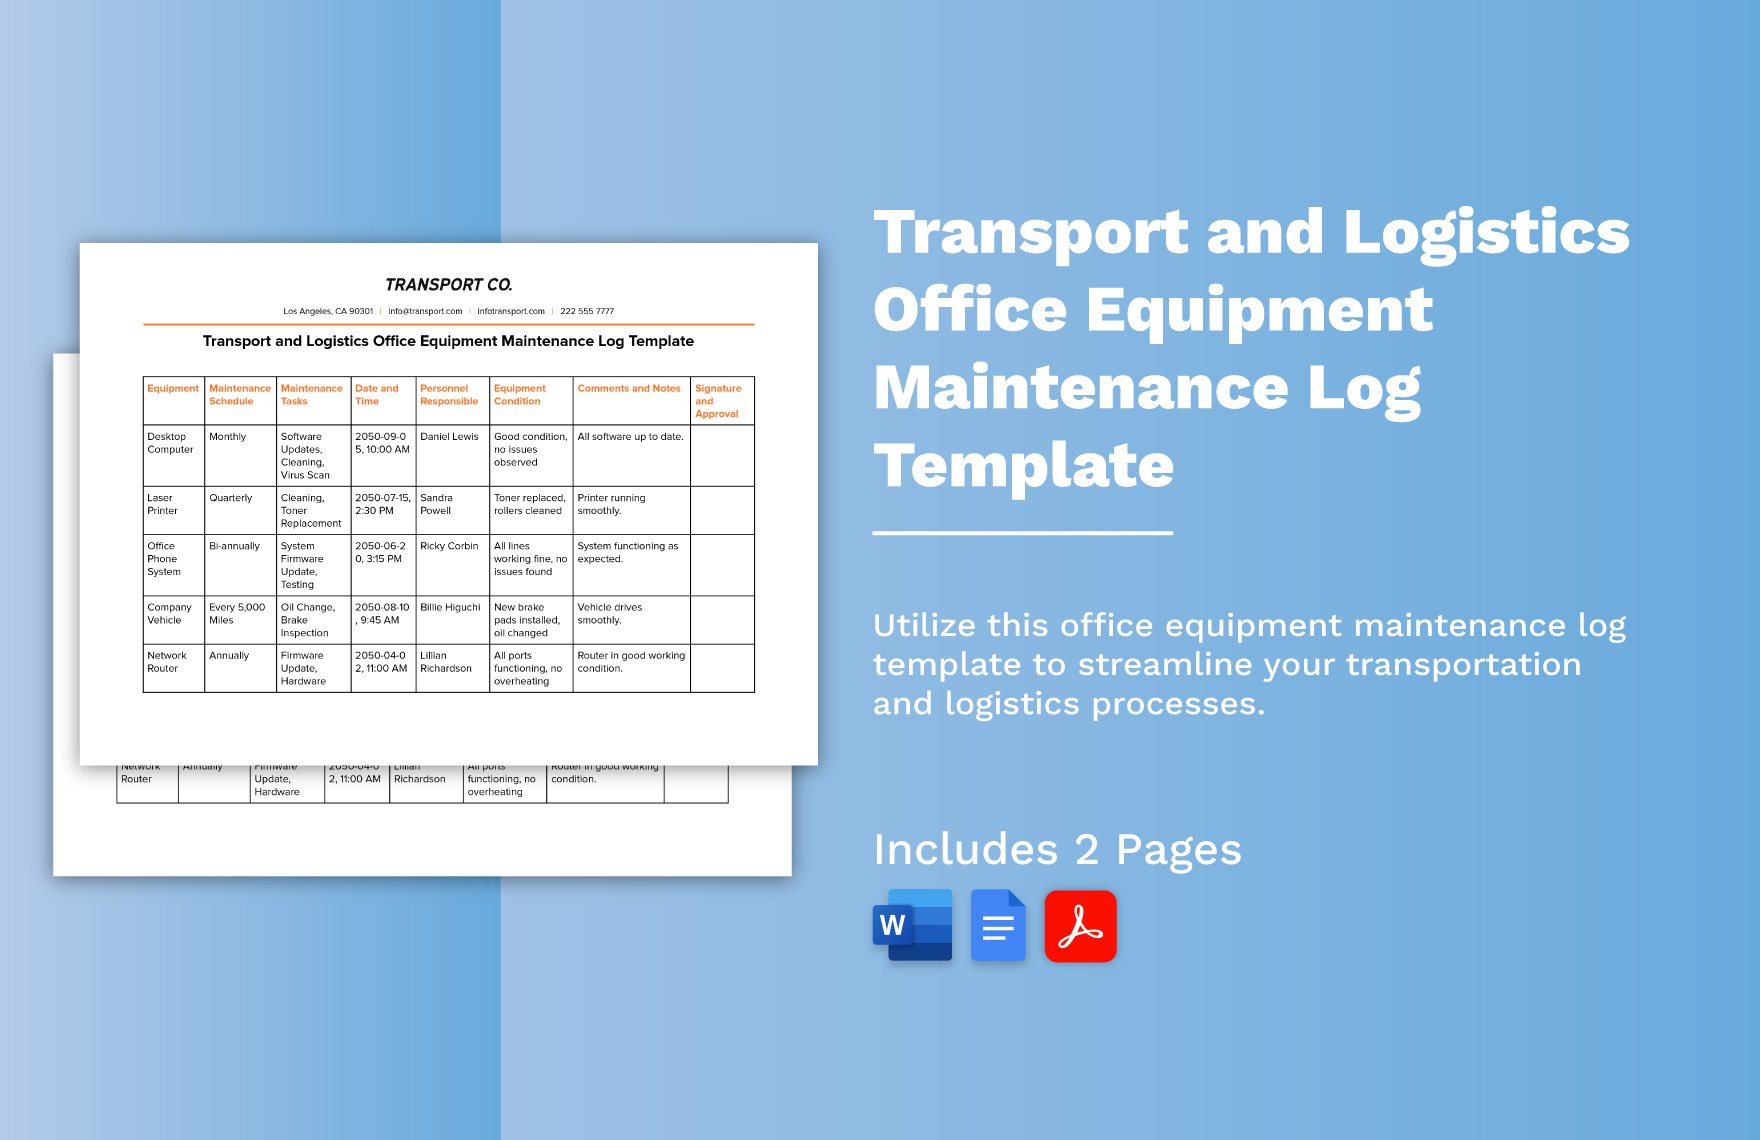 Transport and Logistics Office Equipment Maintenance Log Template